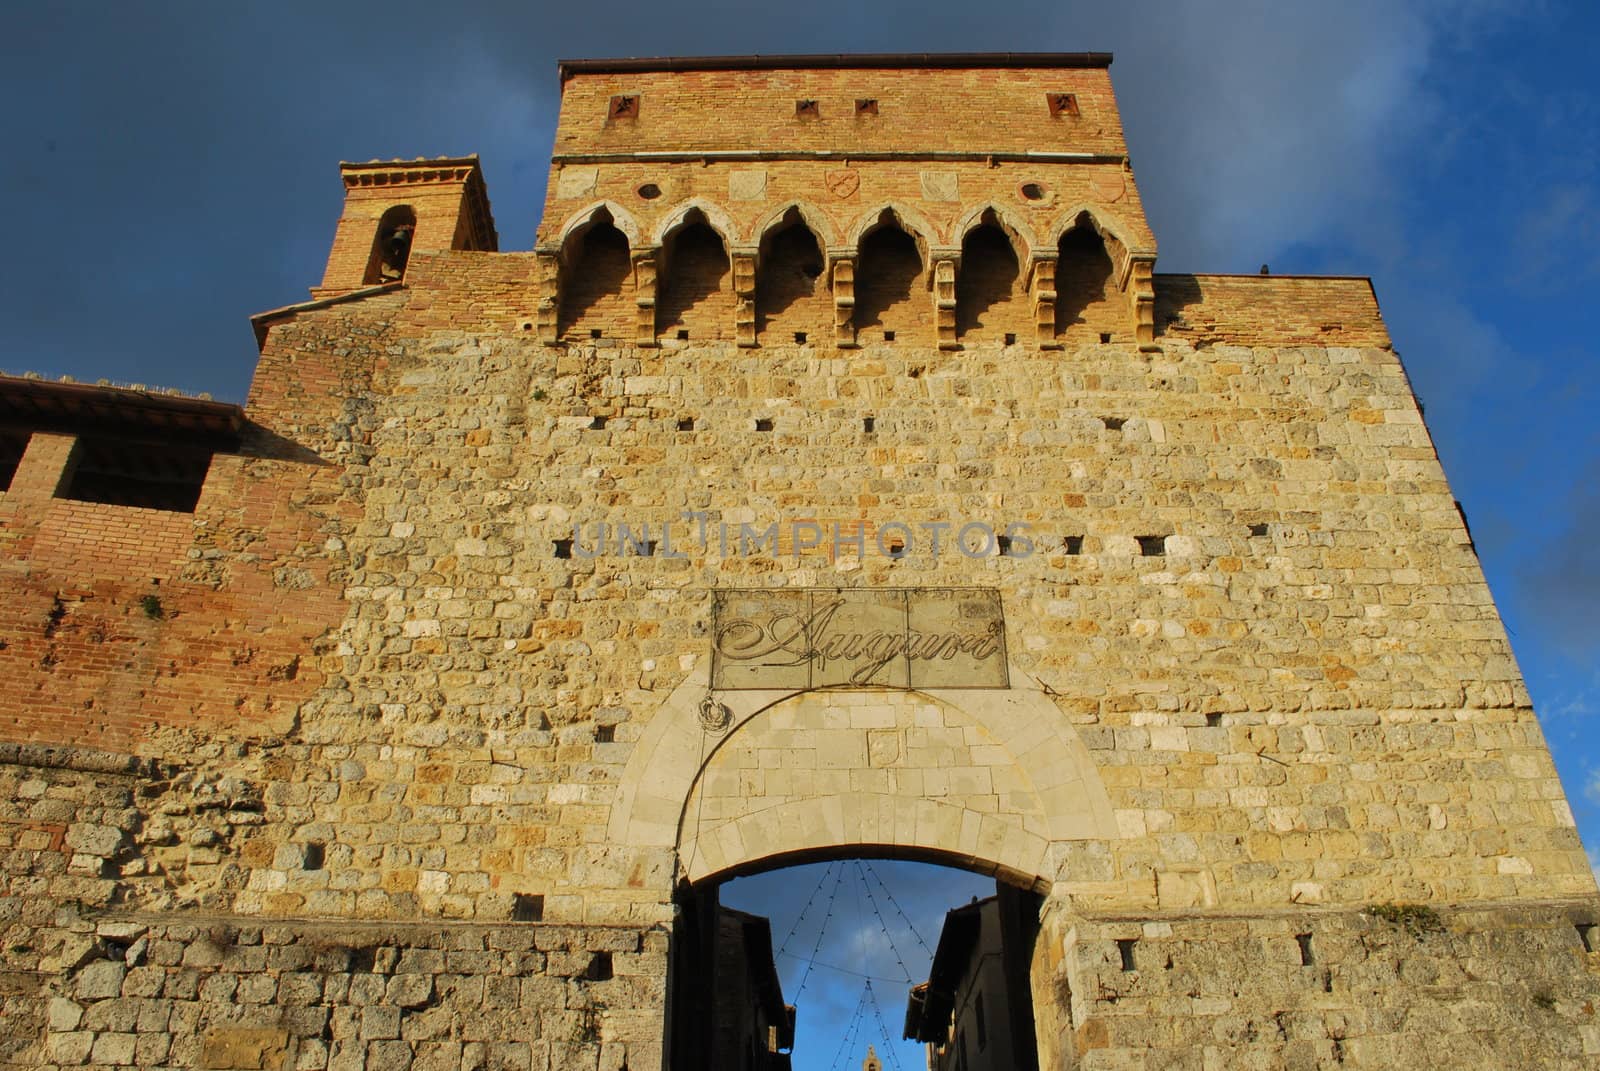 City walls of San Gimignano by mizio1970